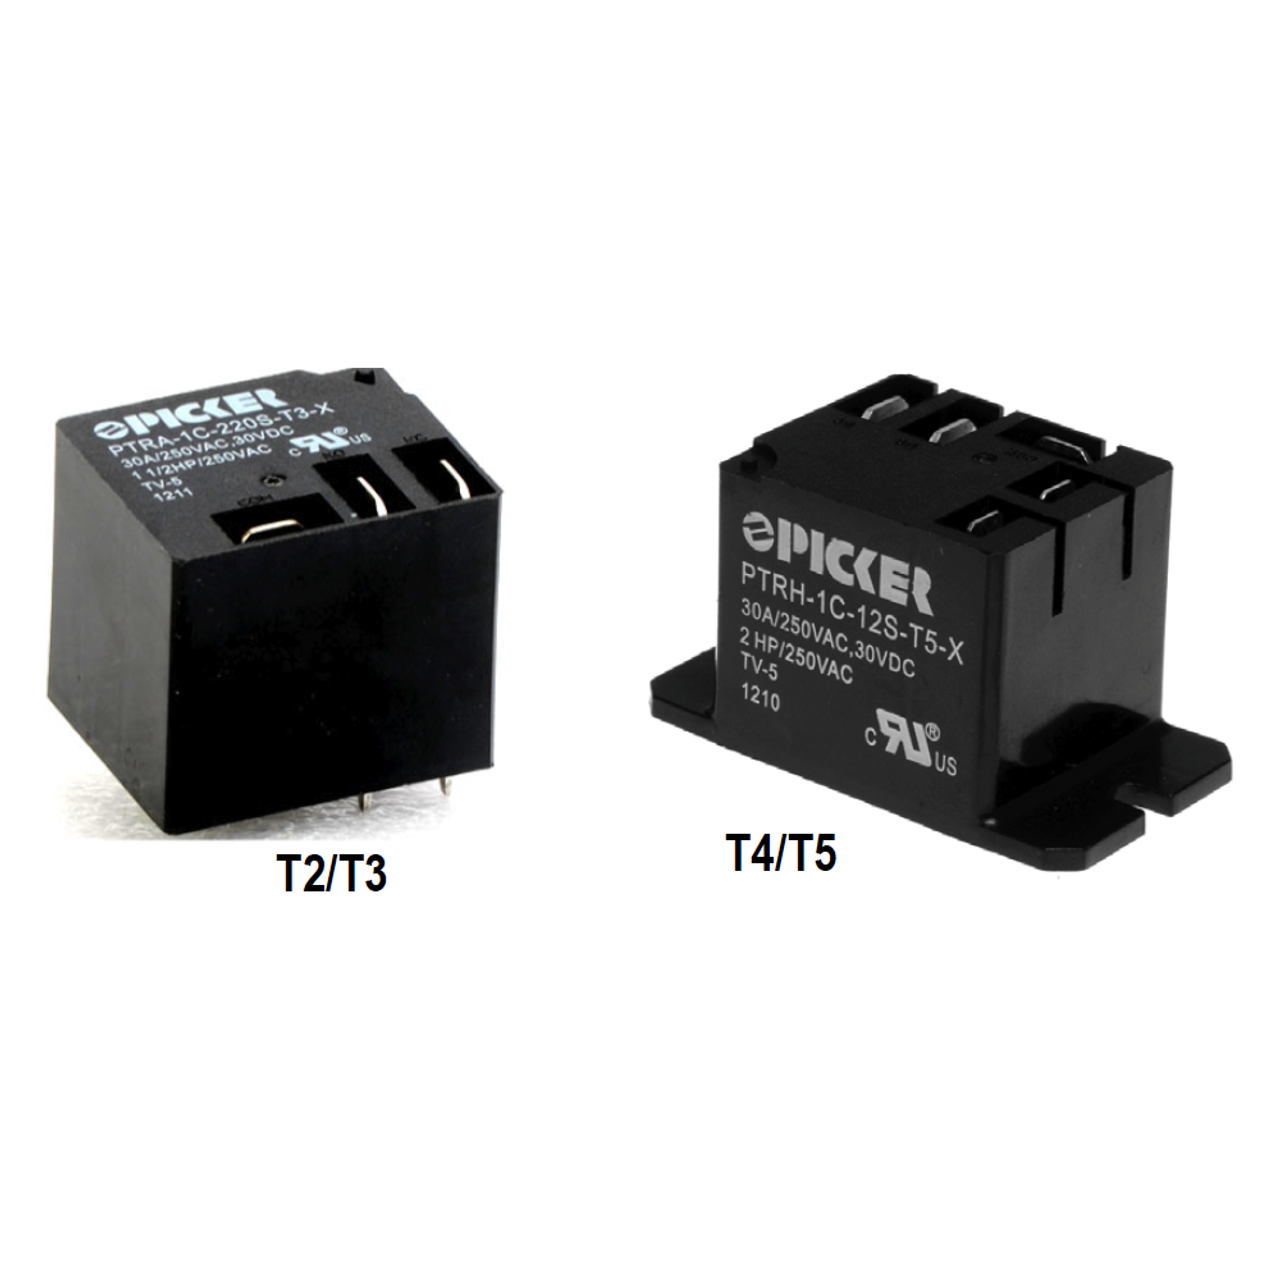 Picker PTRH-1C-110SFT-T5-X67G Power Relays